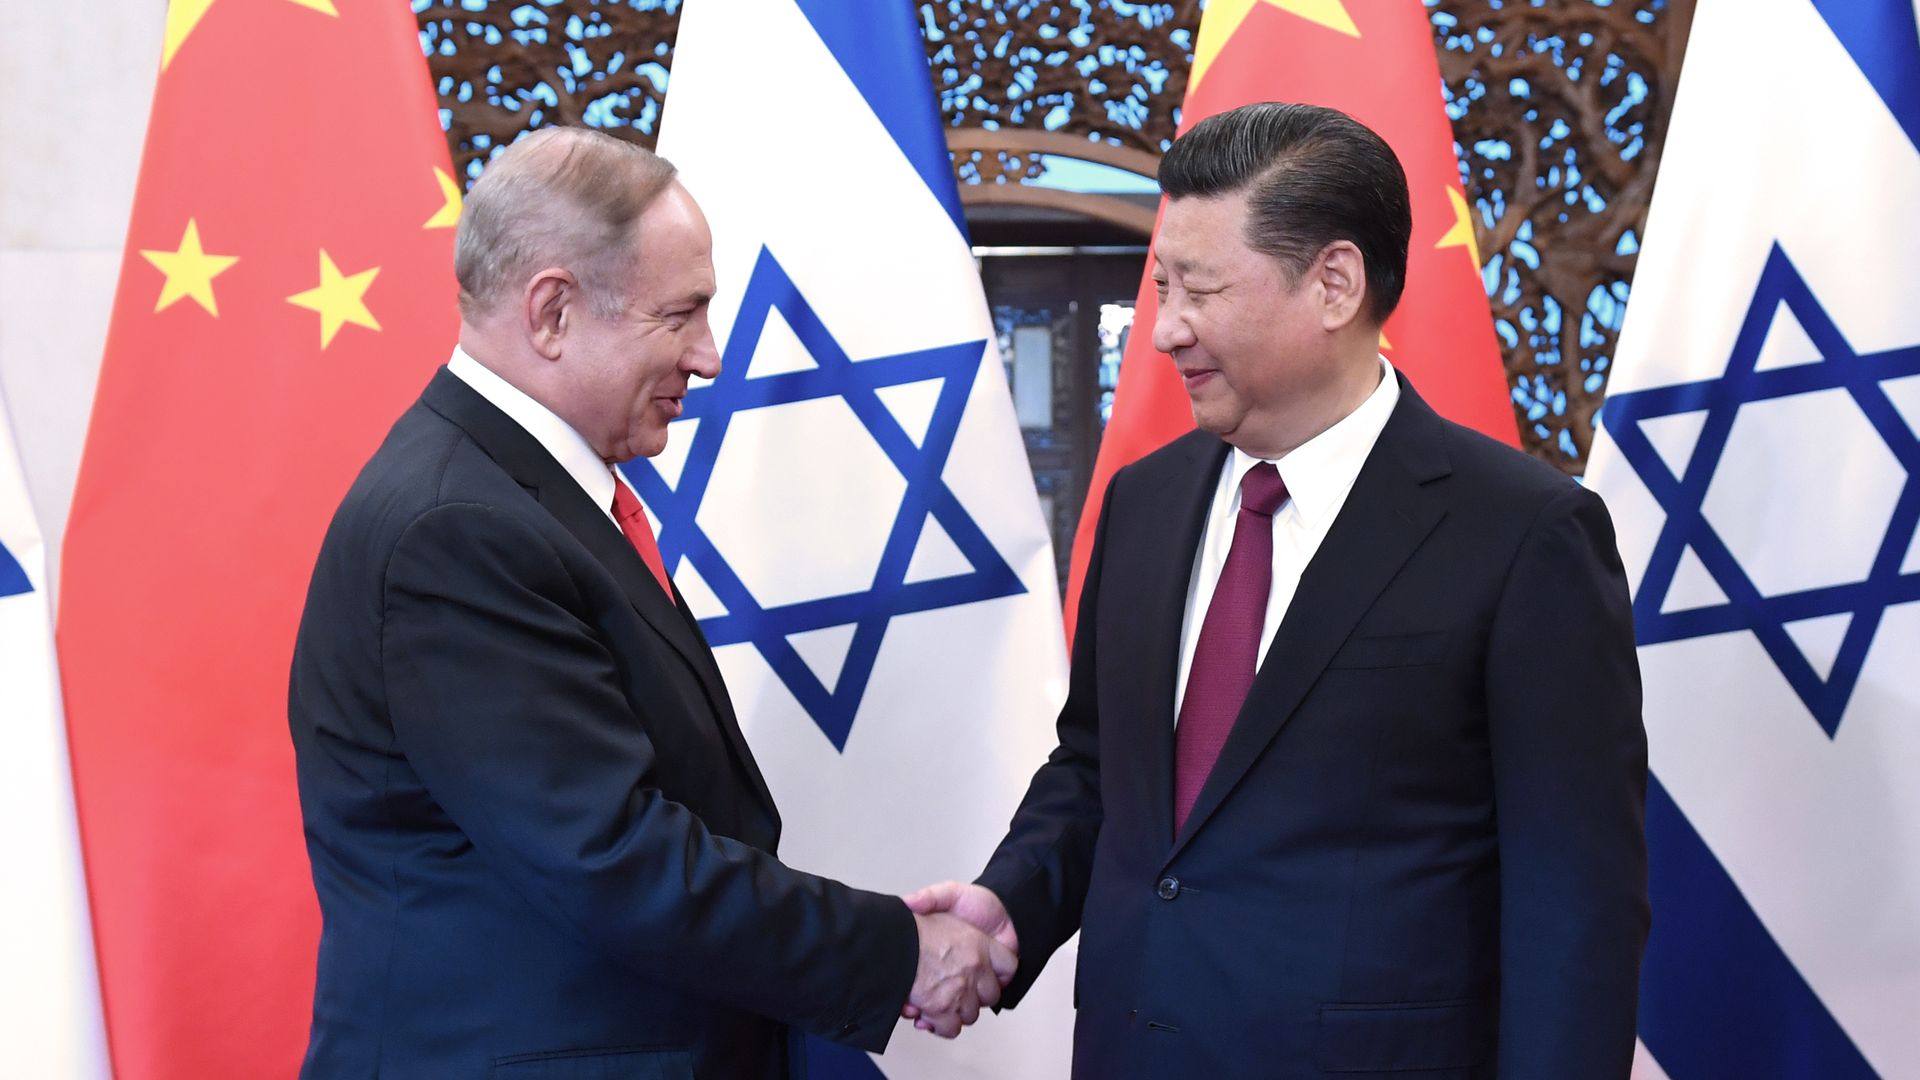 Netanyahu shaking hands with Xi